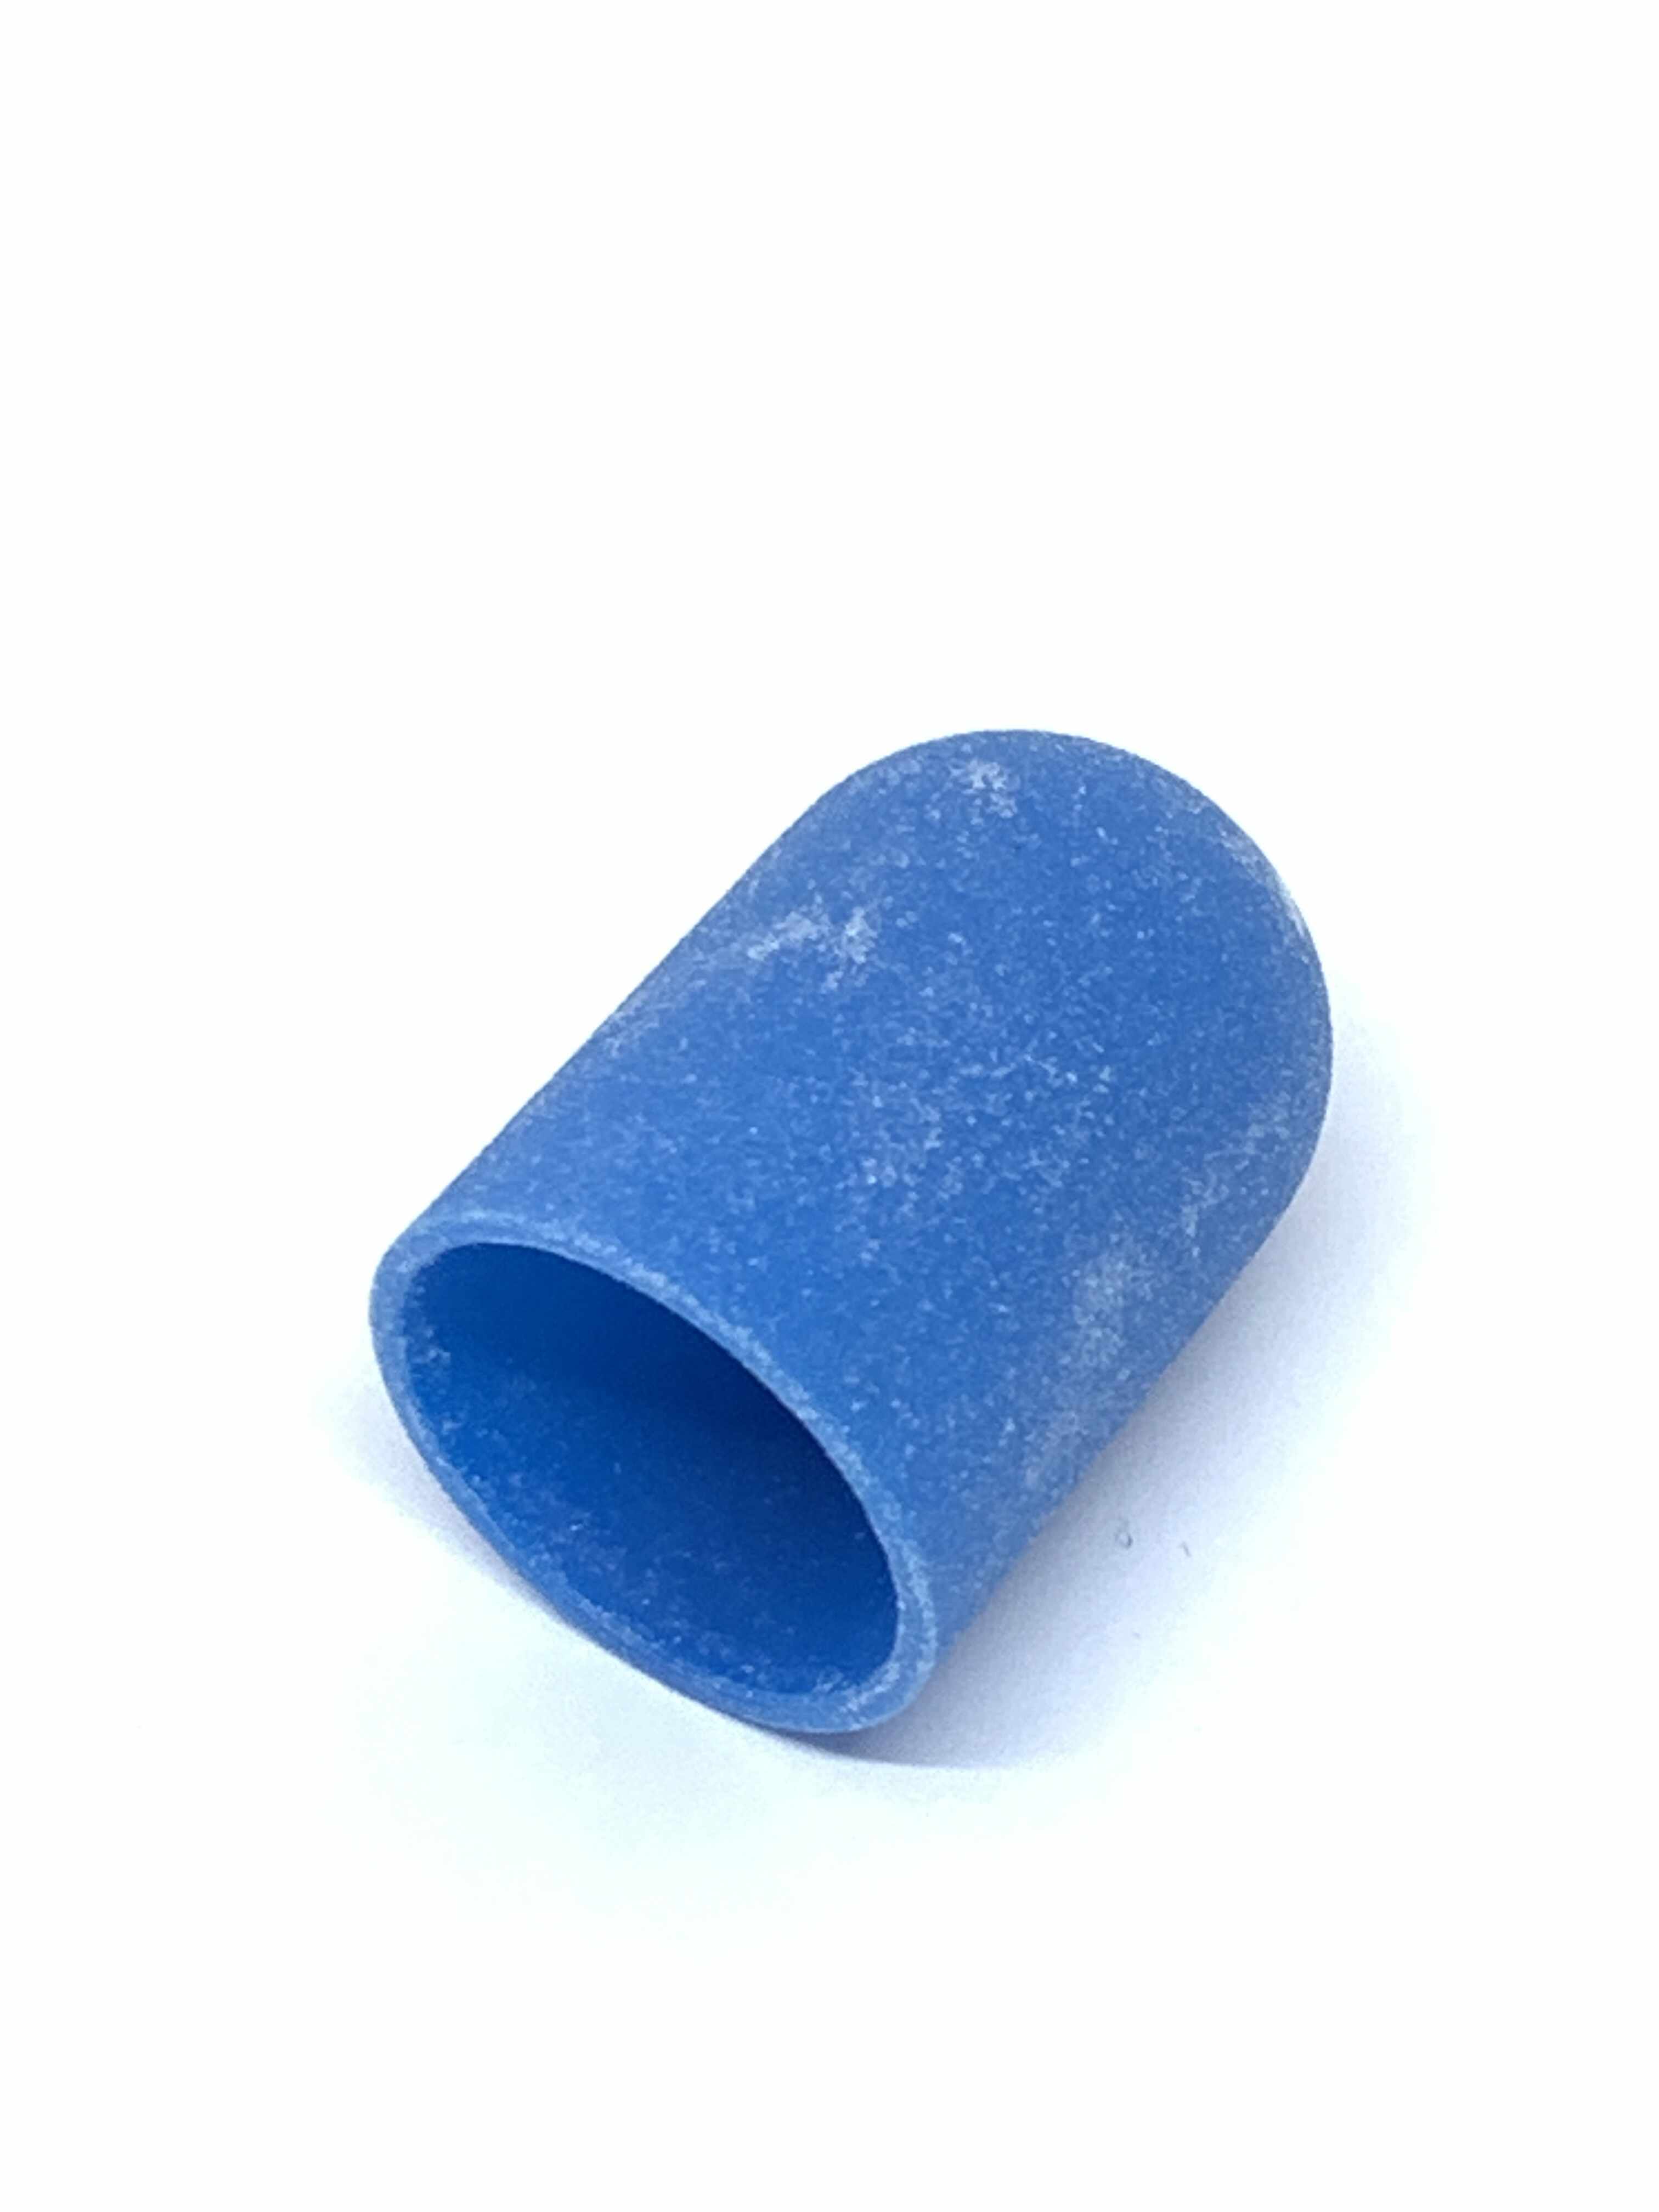 Smirghel Freza Electrica 16 x 25 mm - 150 1 buc, Blue